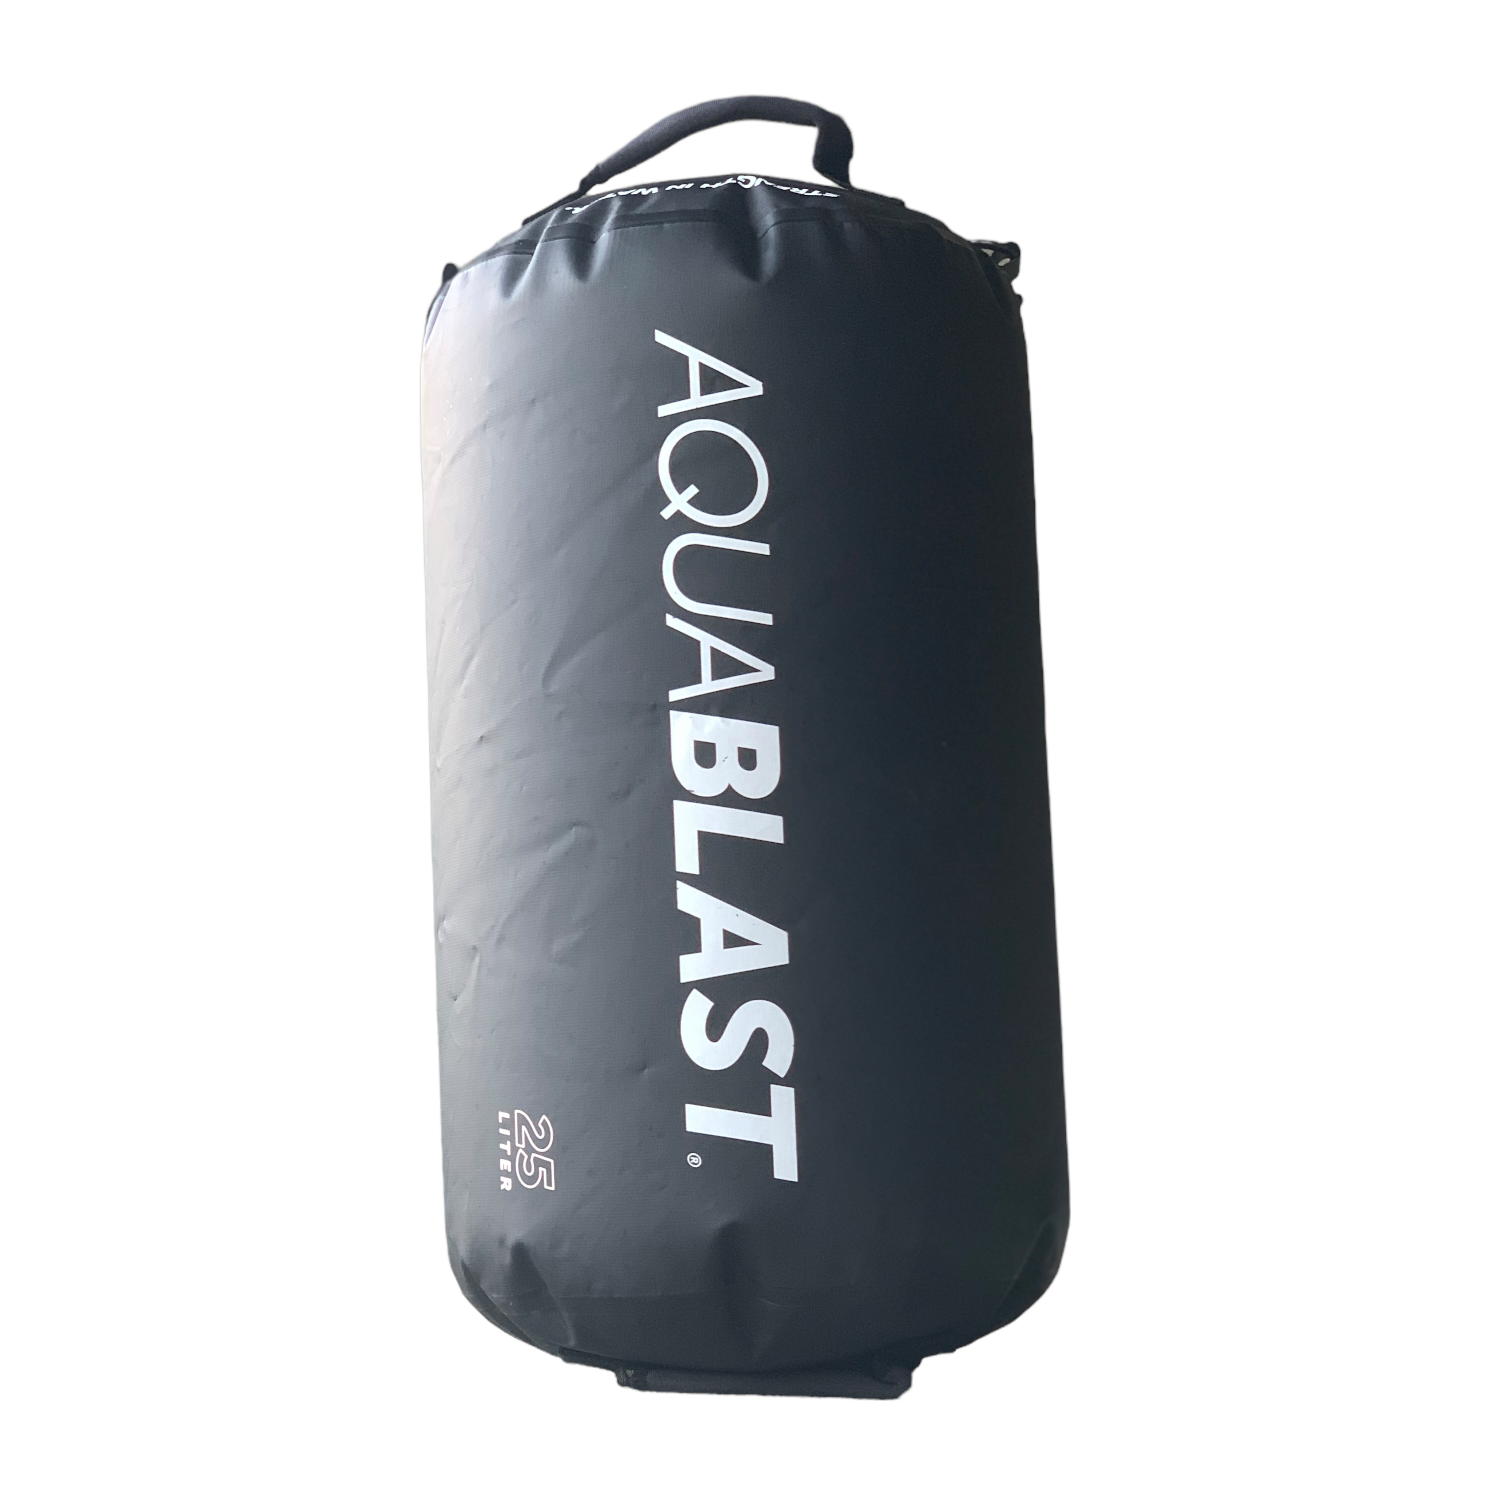 AquaBLAST COMBO - 25 Liter Bag PLUS the Suction Tether System